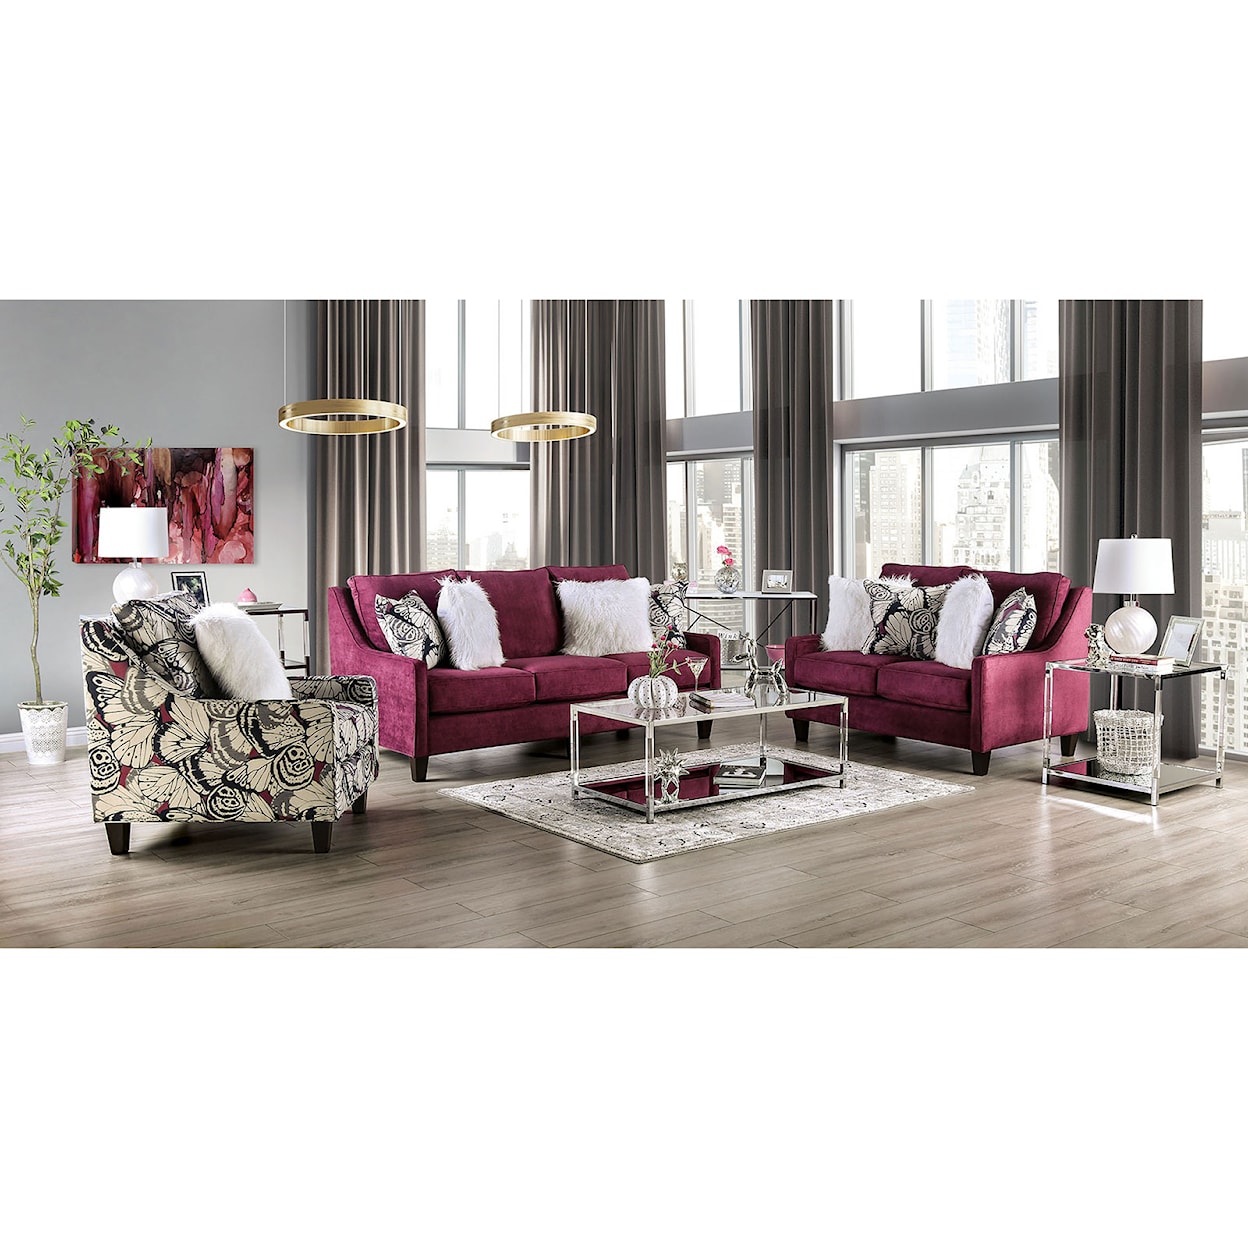 Furniture of America Jillian Sofa